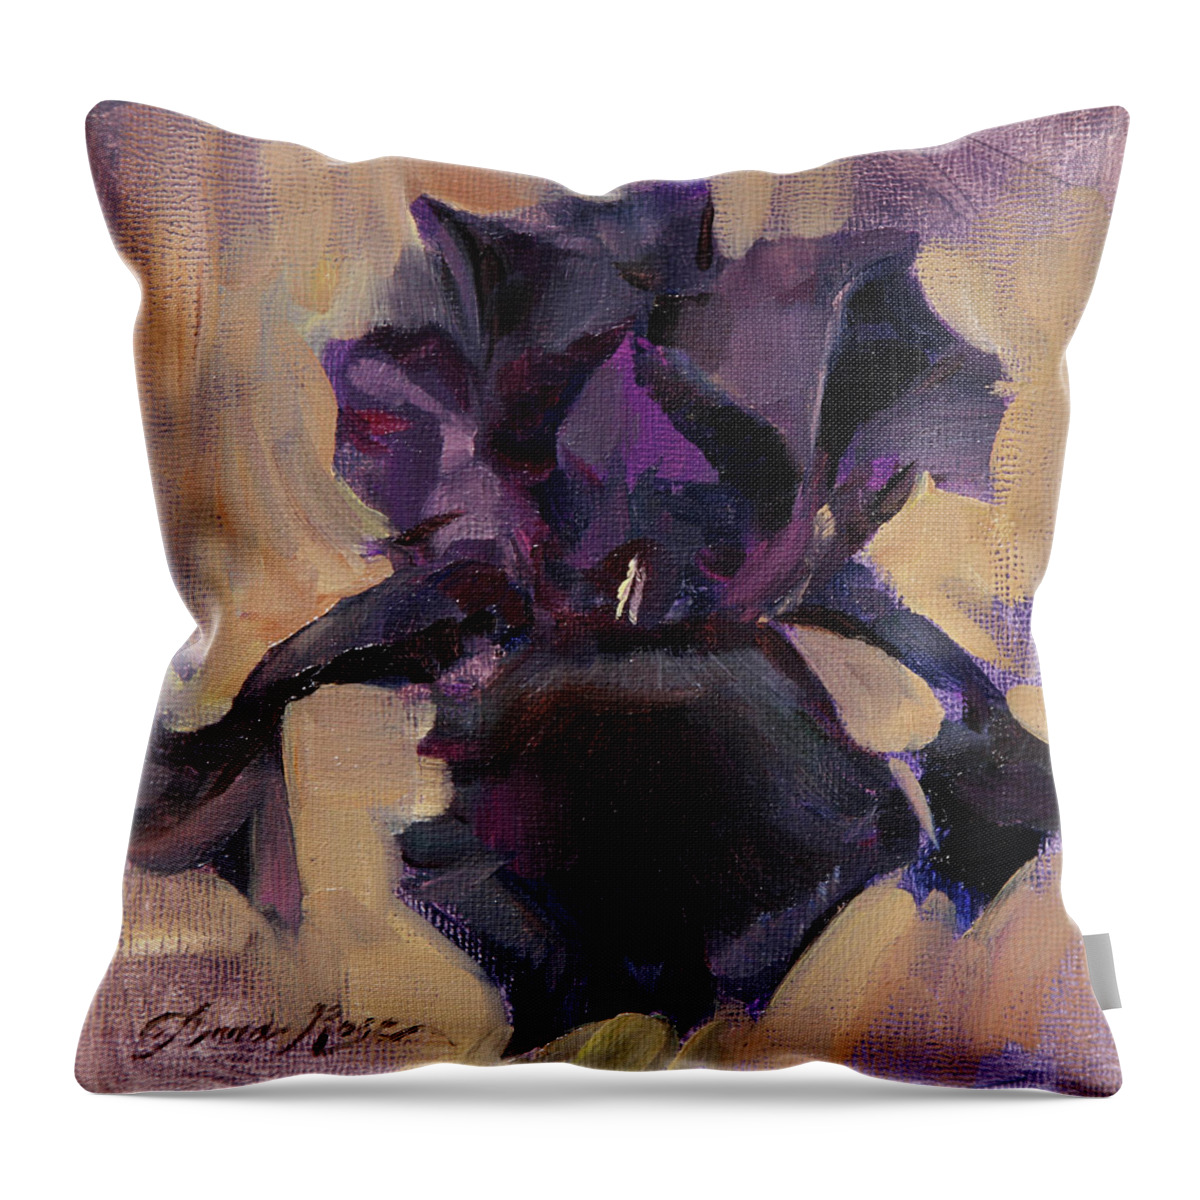 Iris Throw Pillow featuring the painting Bearded Iris Study by Anna Rose Bain